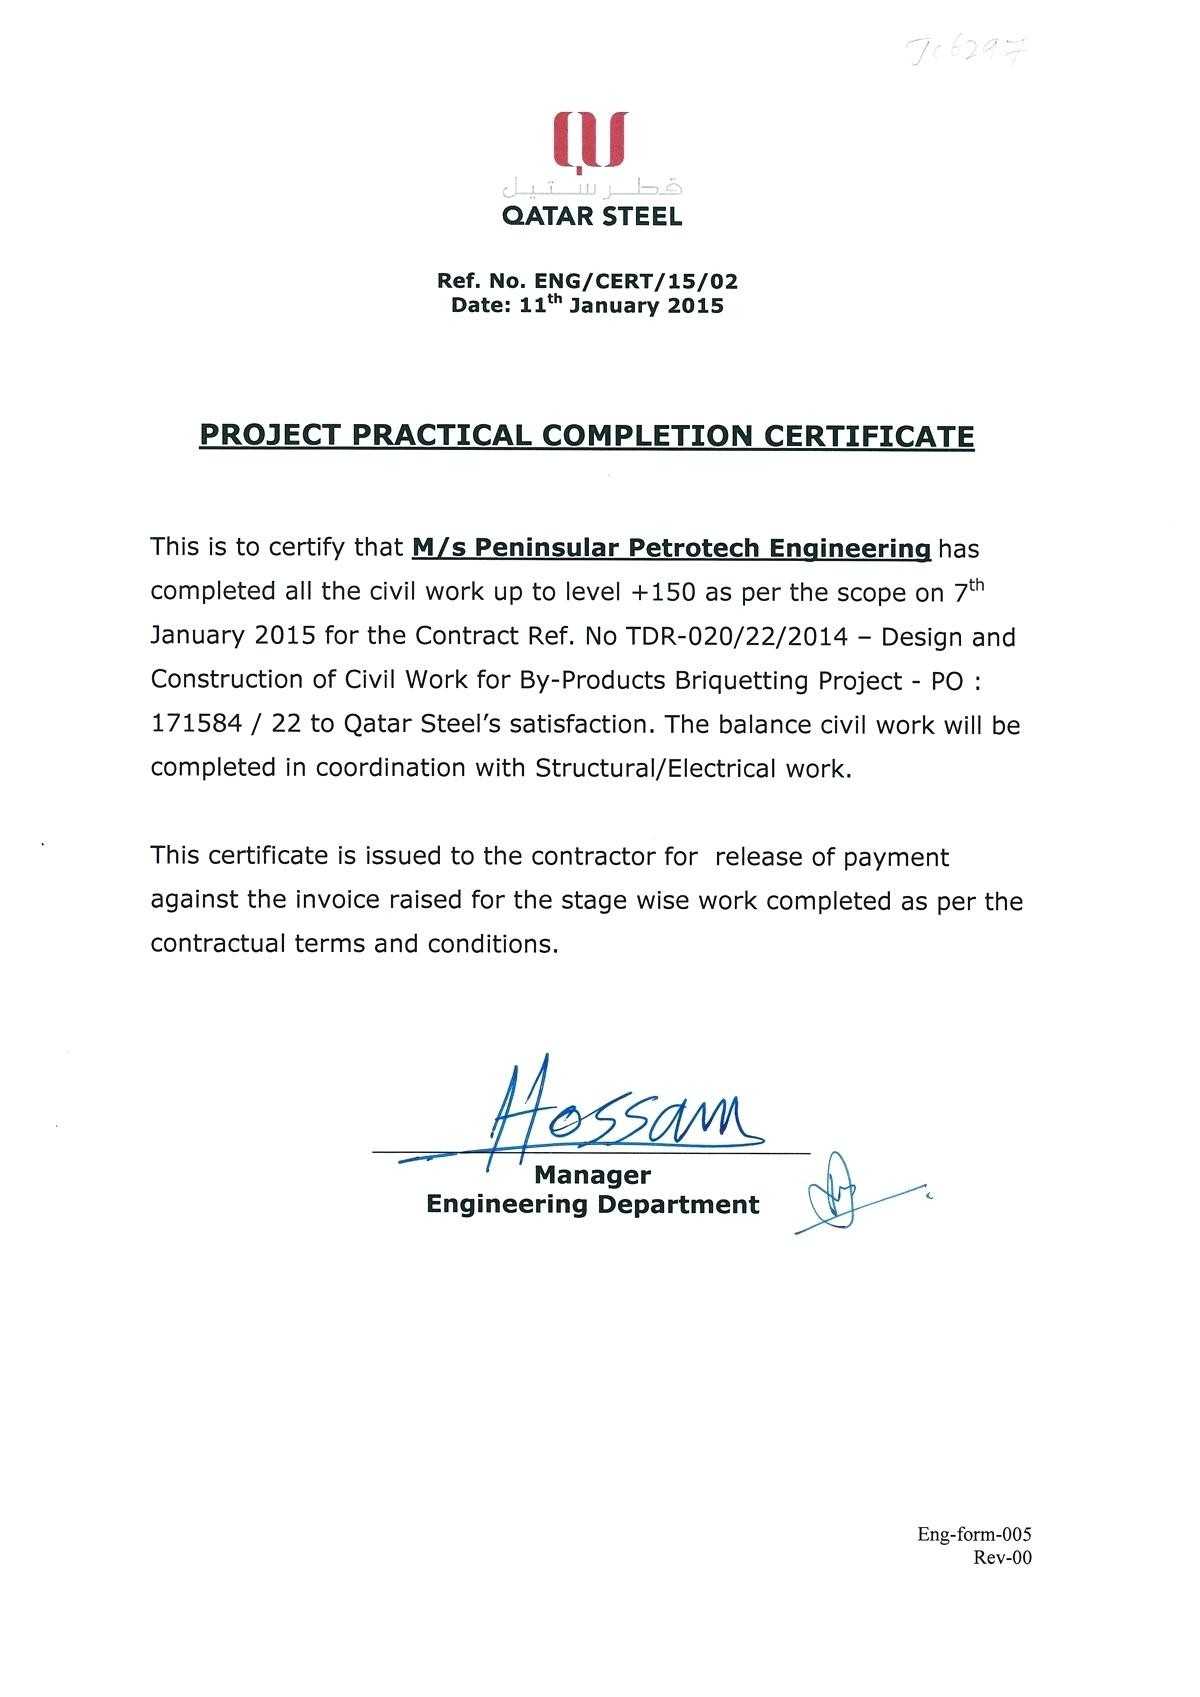 028 Construction Work Order Template Completion Certificate In Practical Completion Certificate Template Uk